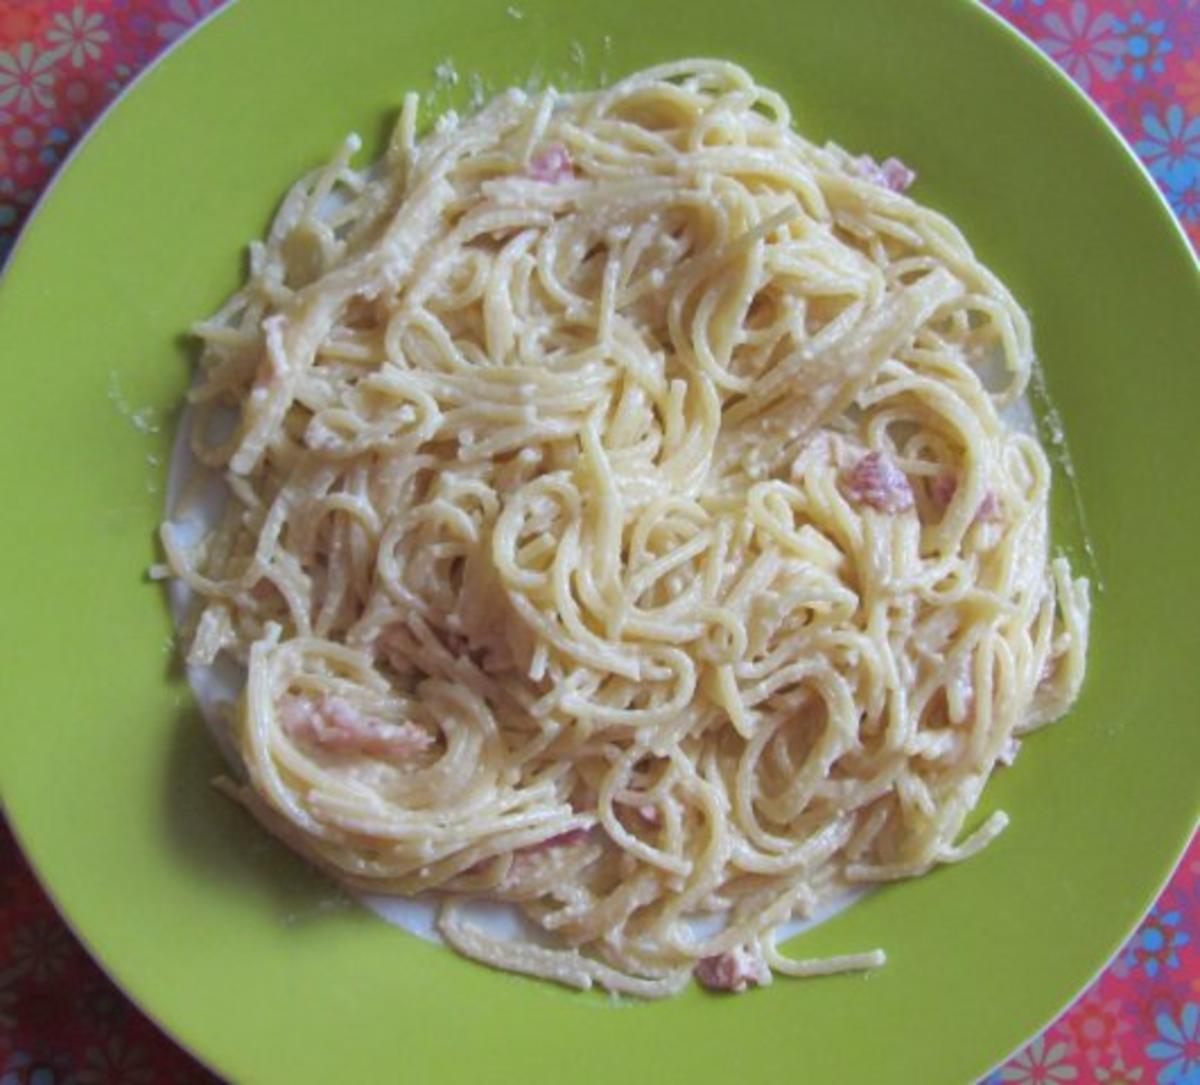 Spaghetti Carabonara - Rezept